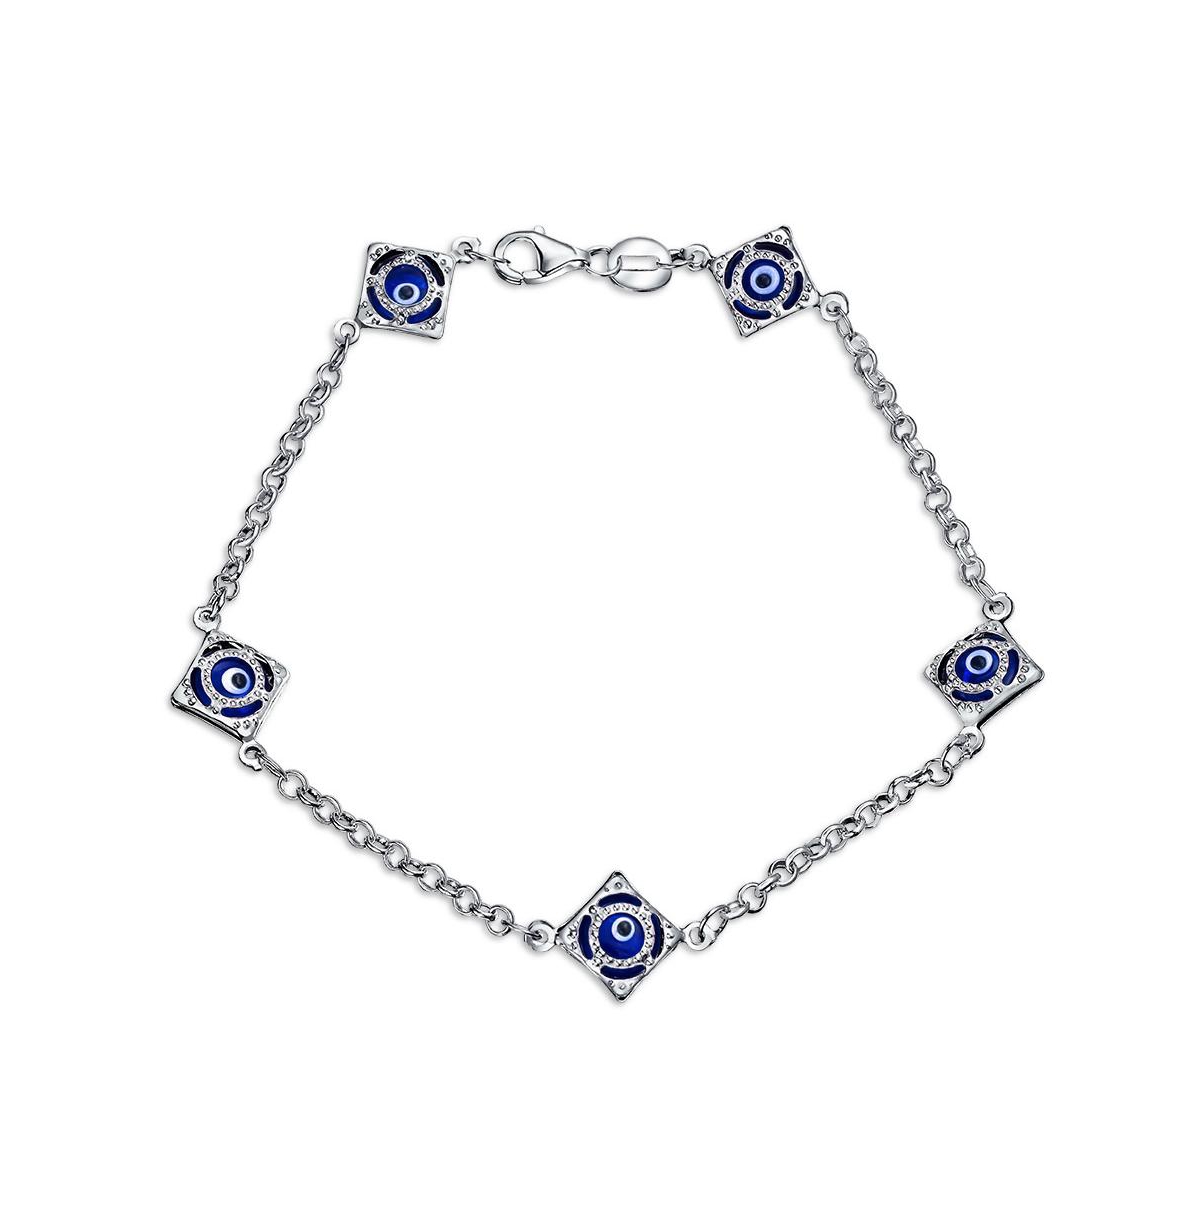 Turkish Navy Spiritual Protection Amulet Evil Eye Blue Evil Eye Charm Link Bracelet For Women Teens .925 Sterling Silver 7.5 Inch - Navy